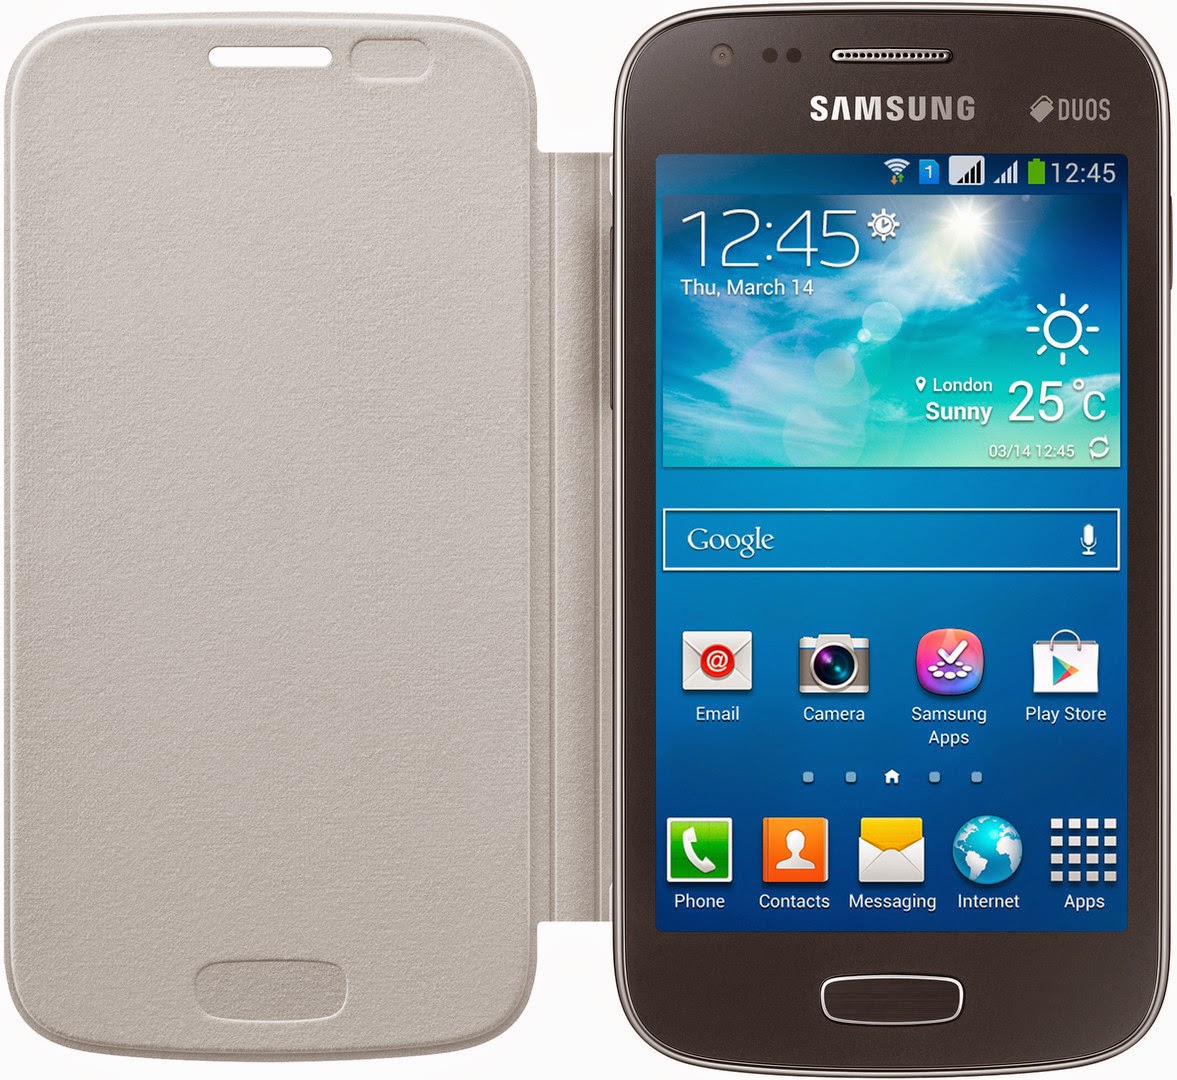 Kumpulan Gambar Foto Handphone Samsung Galaxy Ace 3 